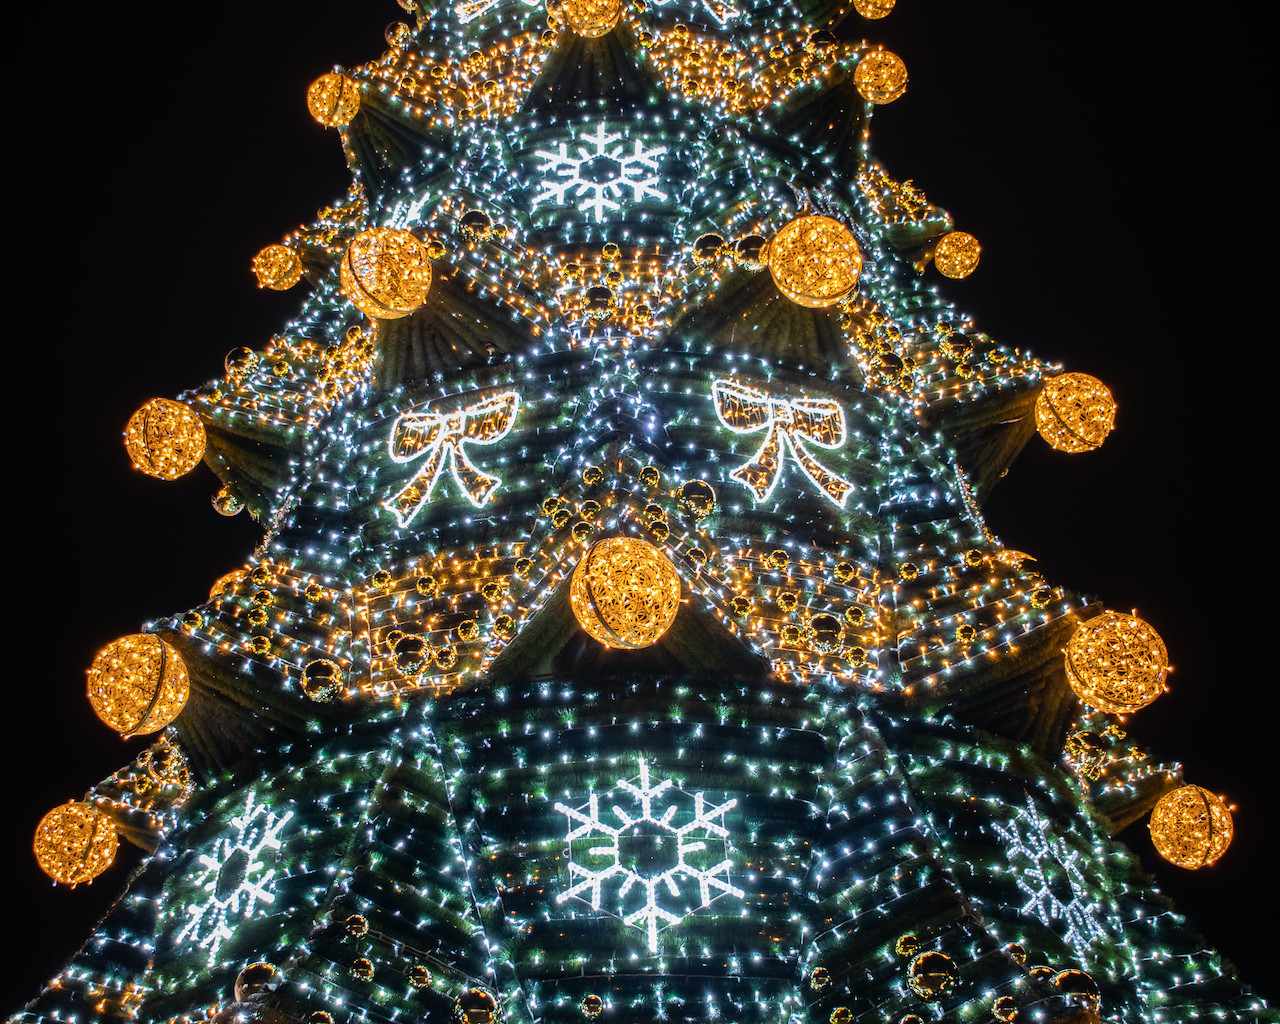 The Main Christmas Tree of Kherson. 2022